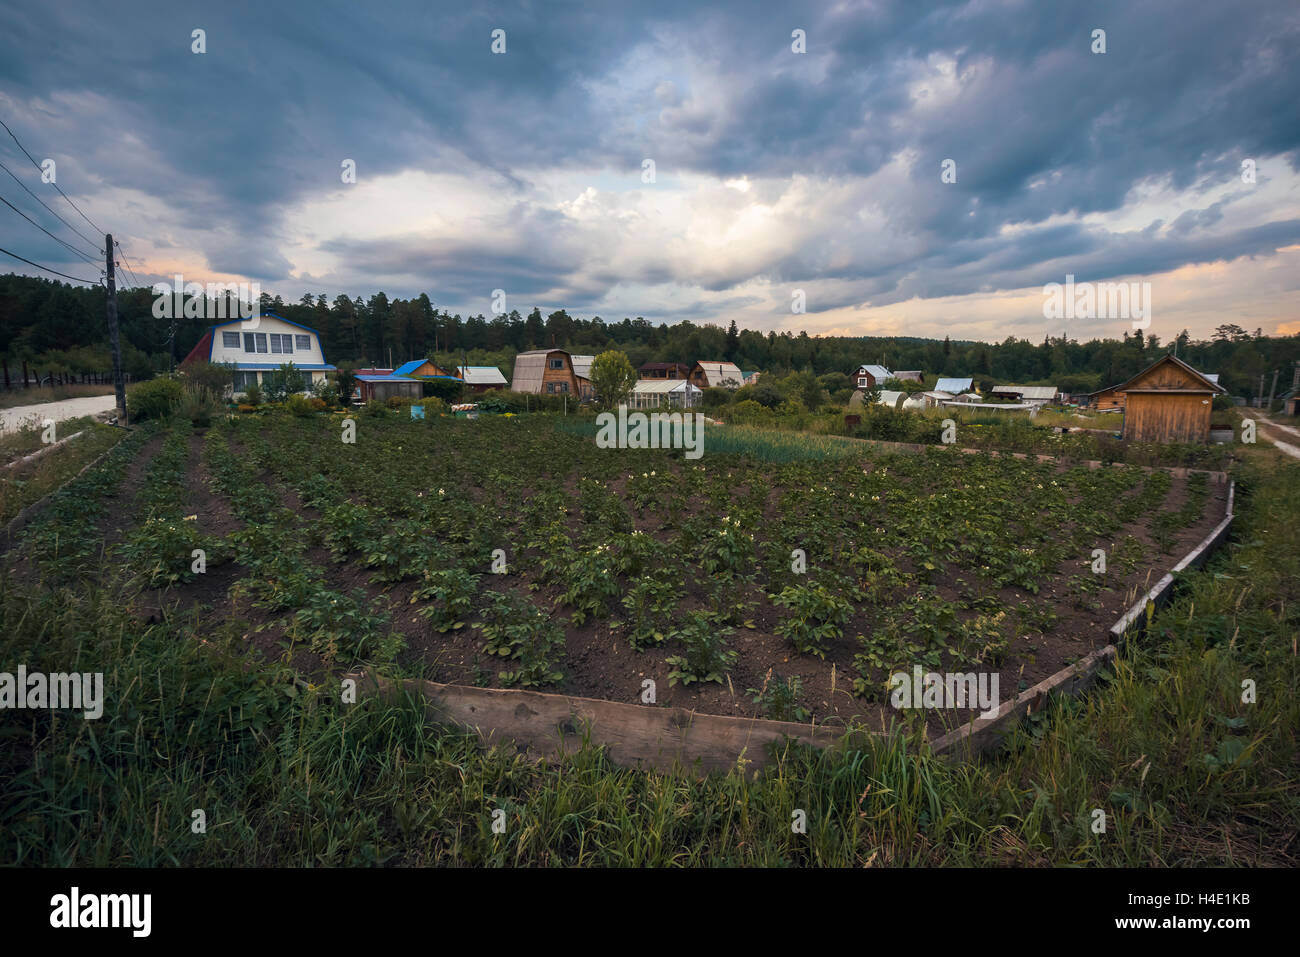 Dacha (Summerhouse) in the Urals Stock Photo